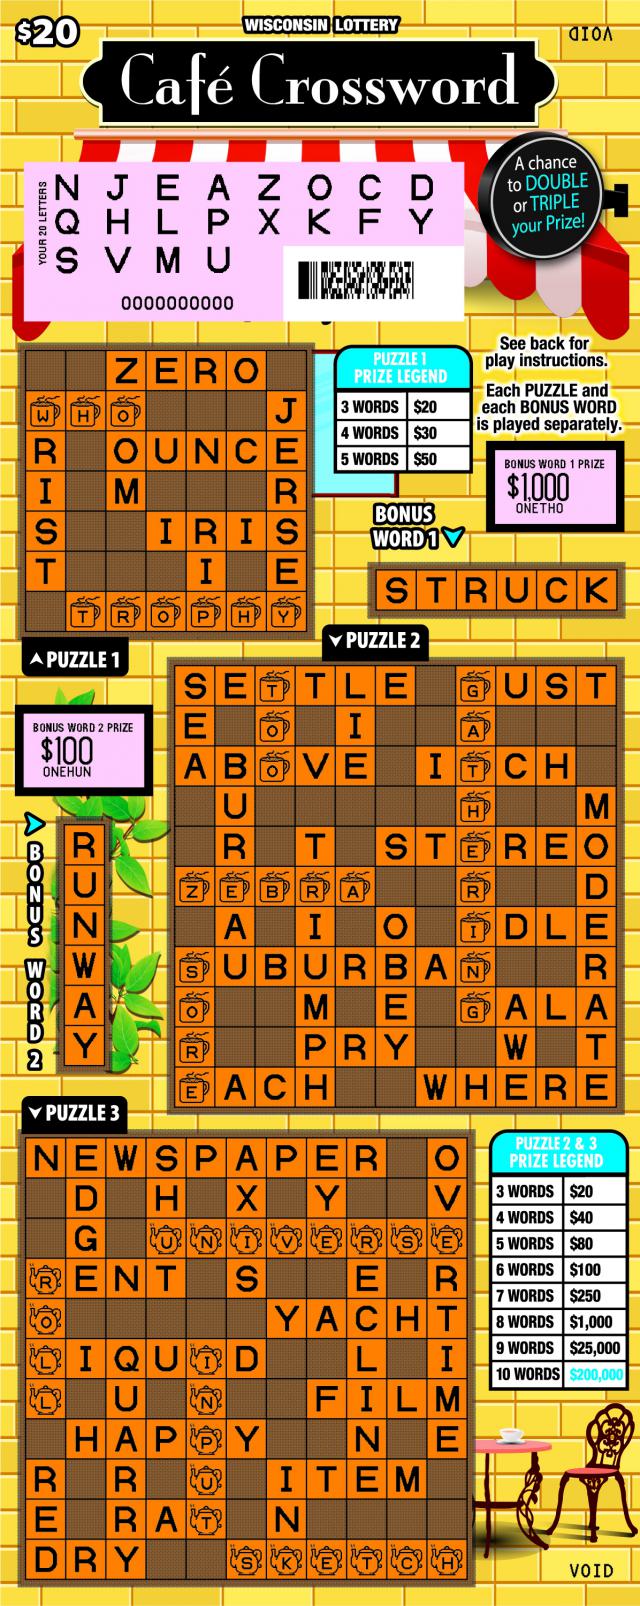 Cafe Crossword (2088) | Wisconsin Lottery